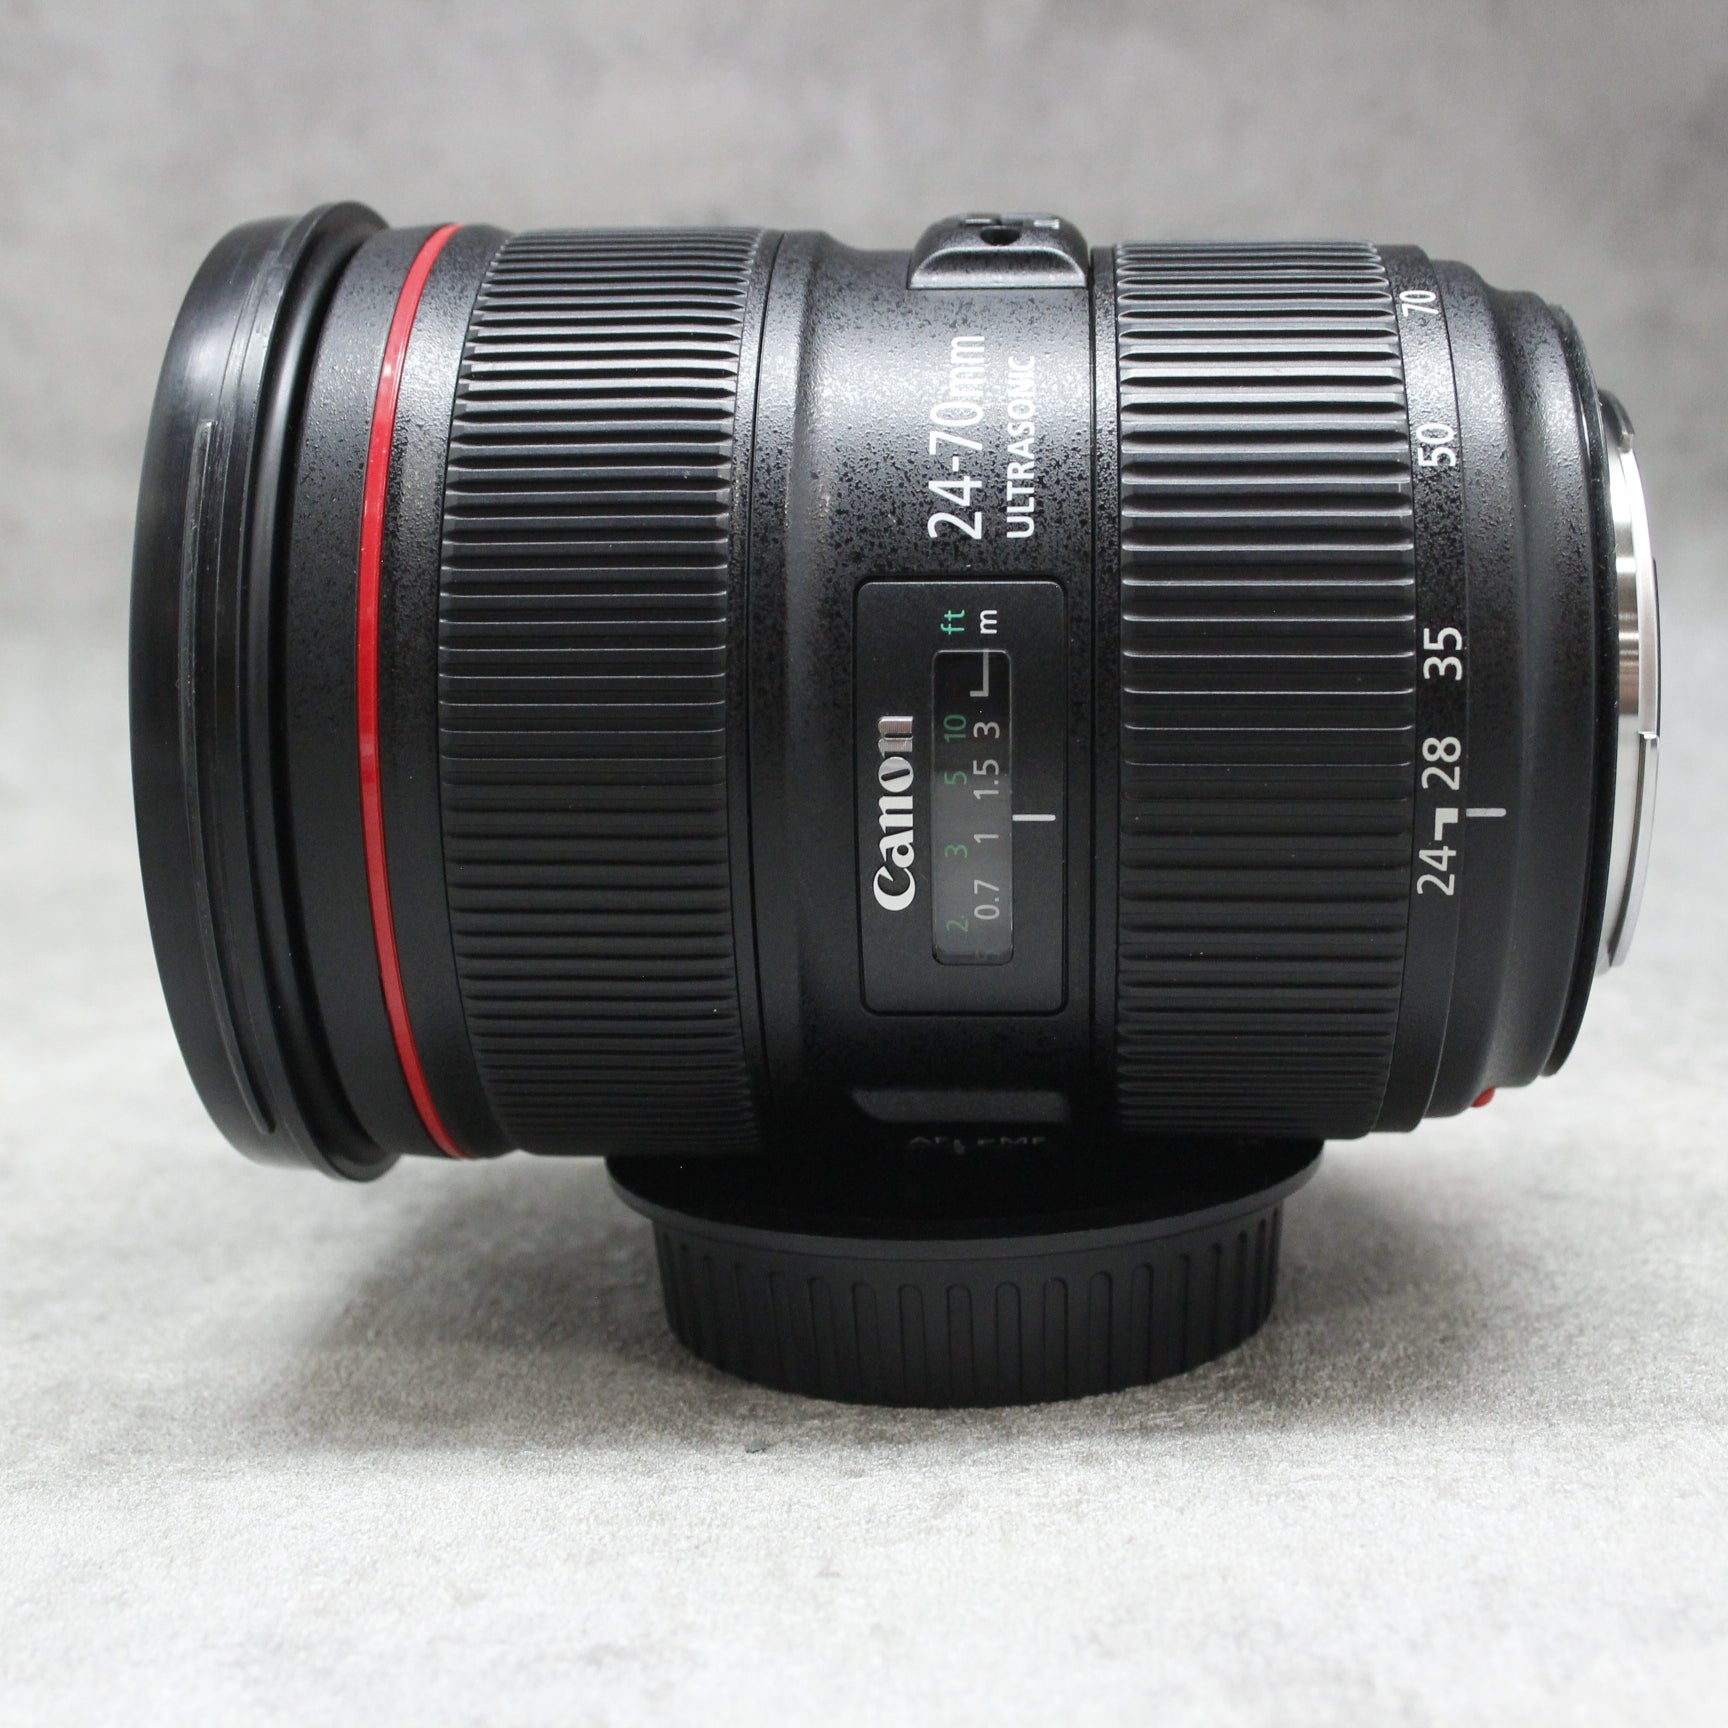 中古品 Canon EF24-70mm F2.8L II USM【8月26日(土) youtube生